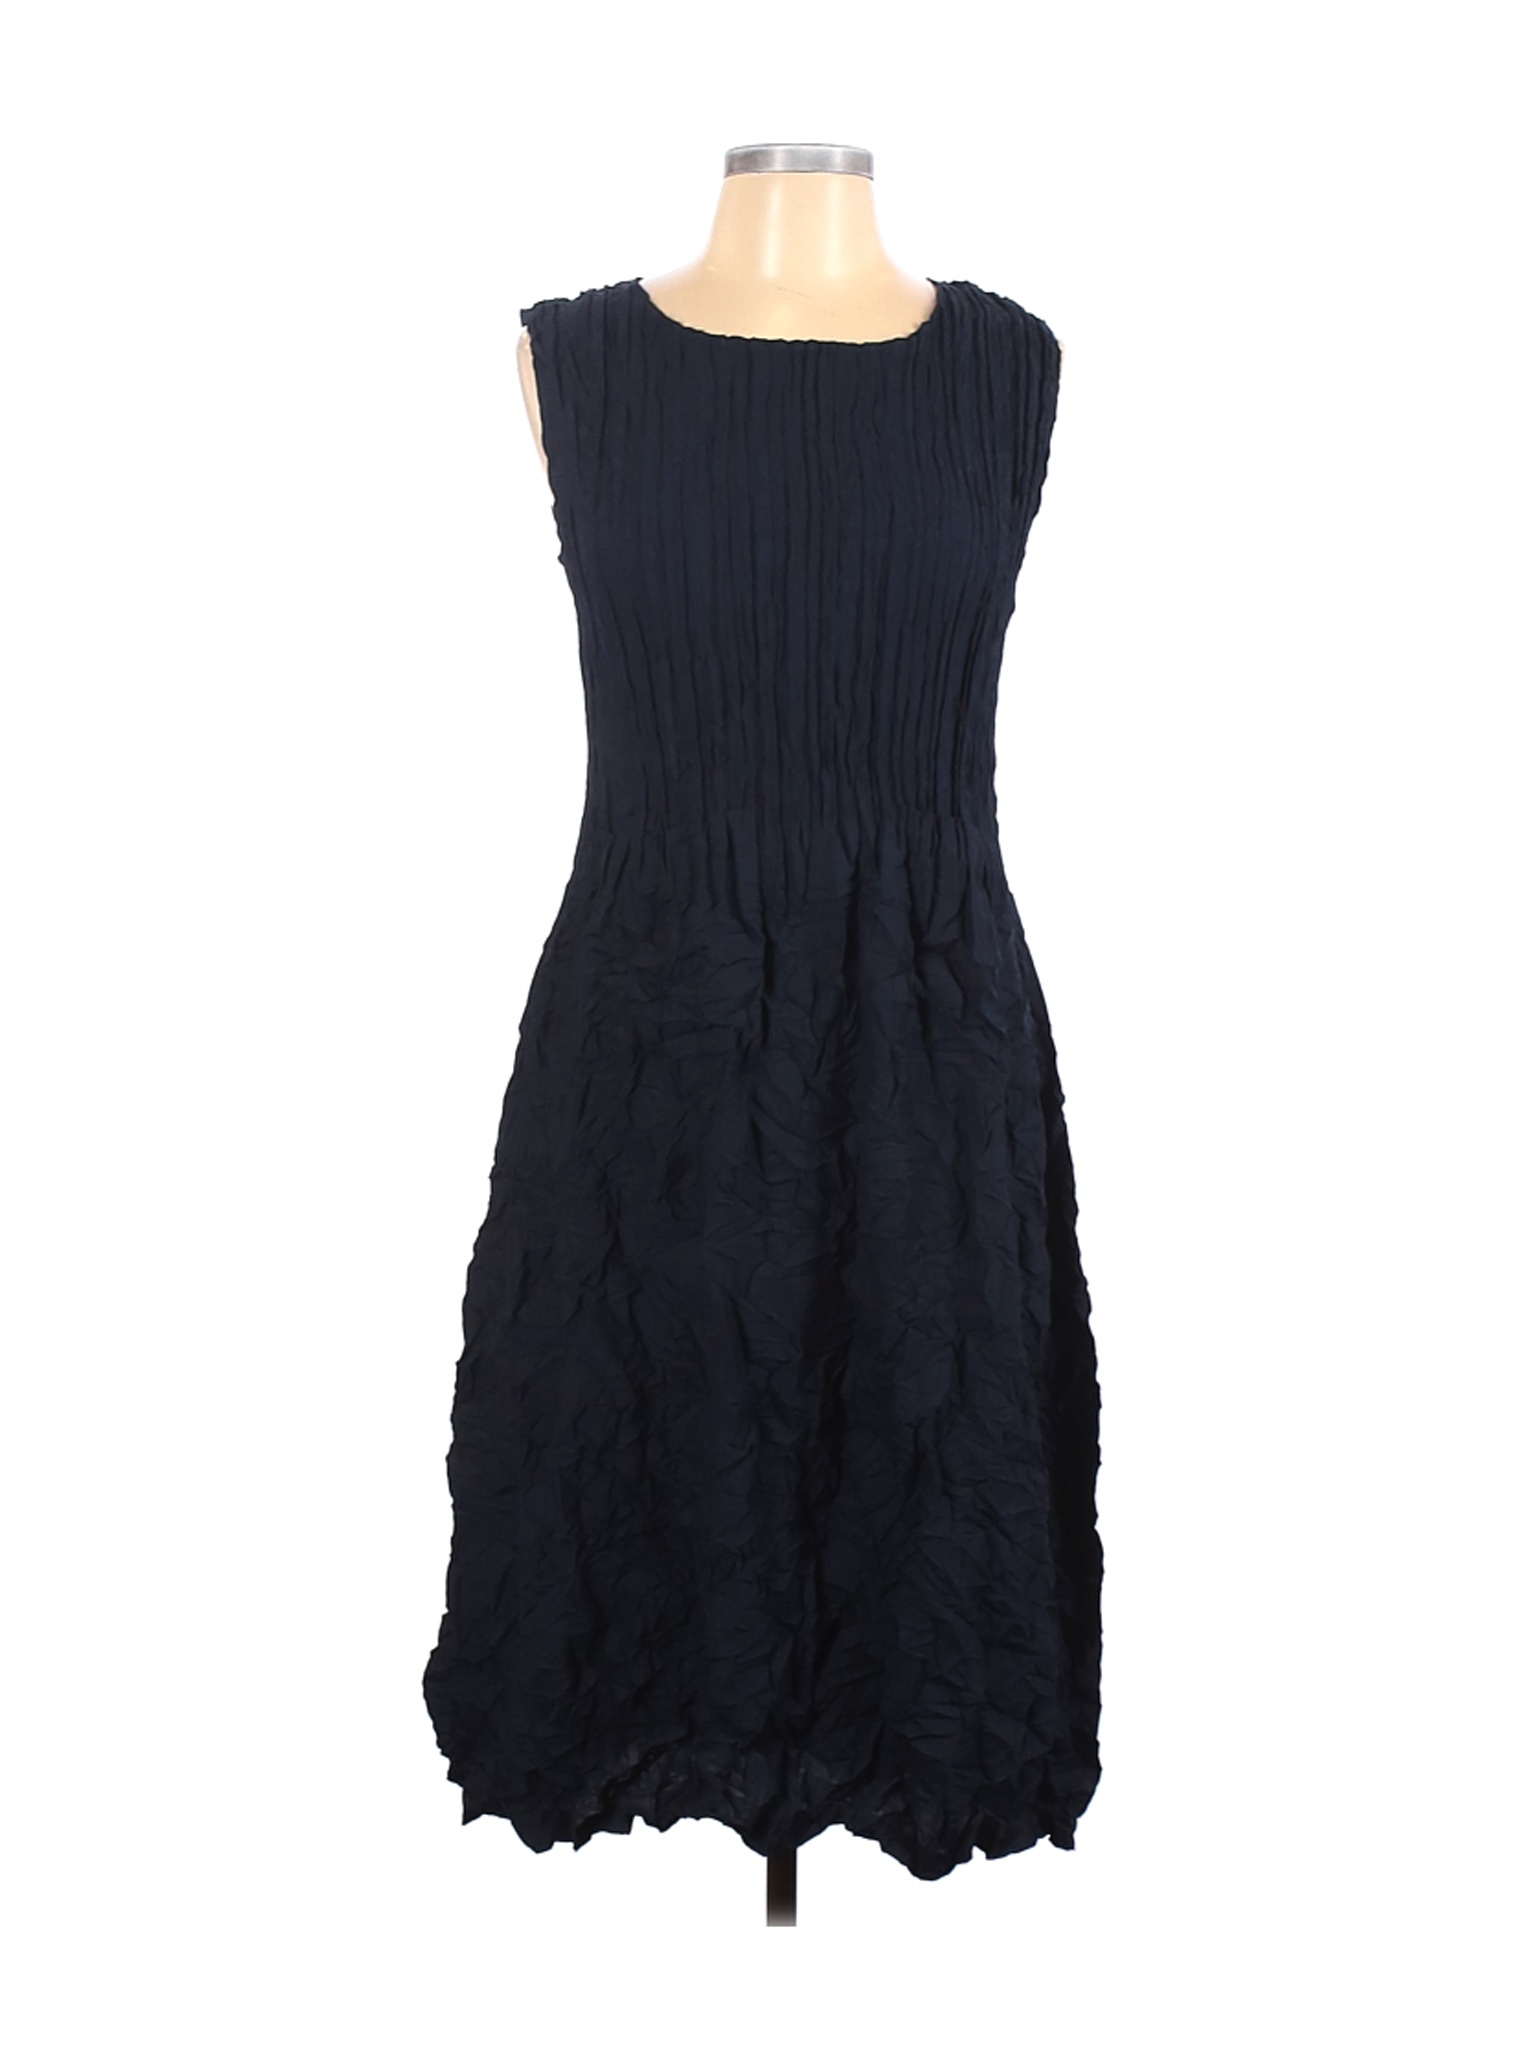 Alquema Women Black Casual Dress 6 | eBay